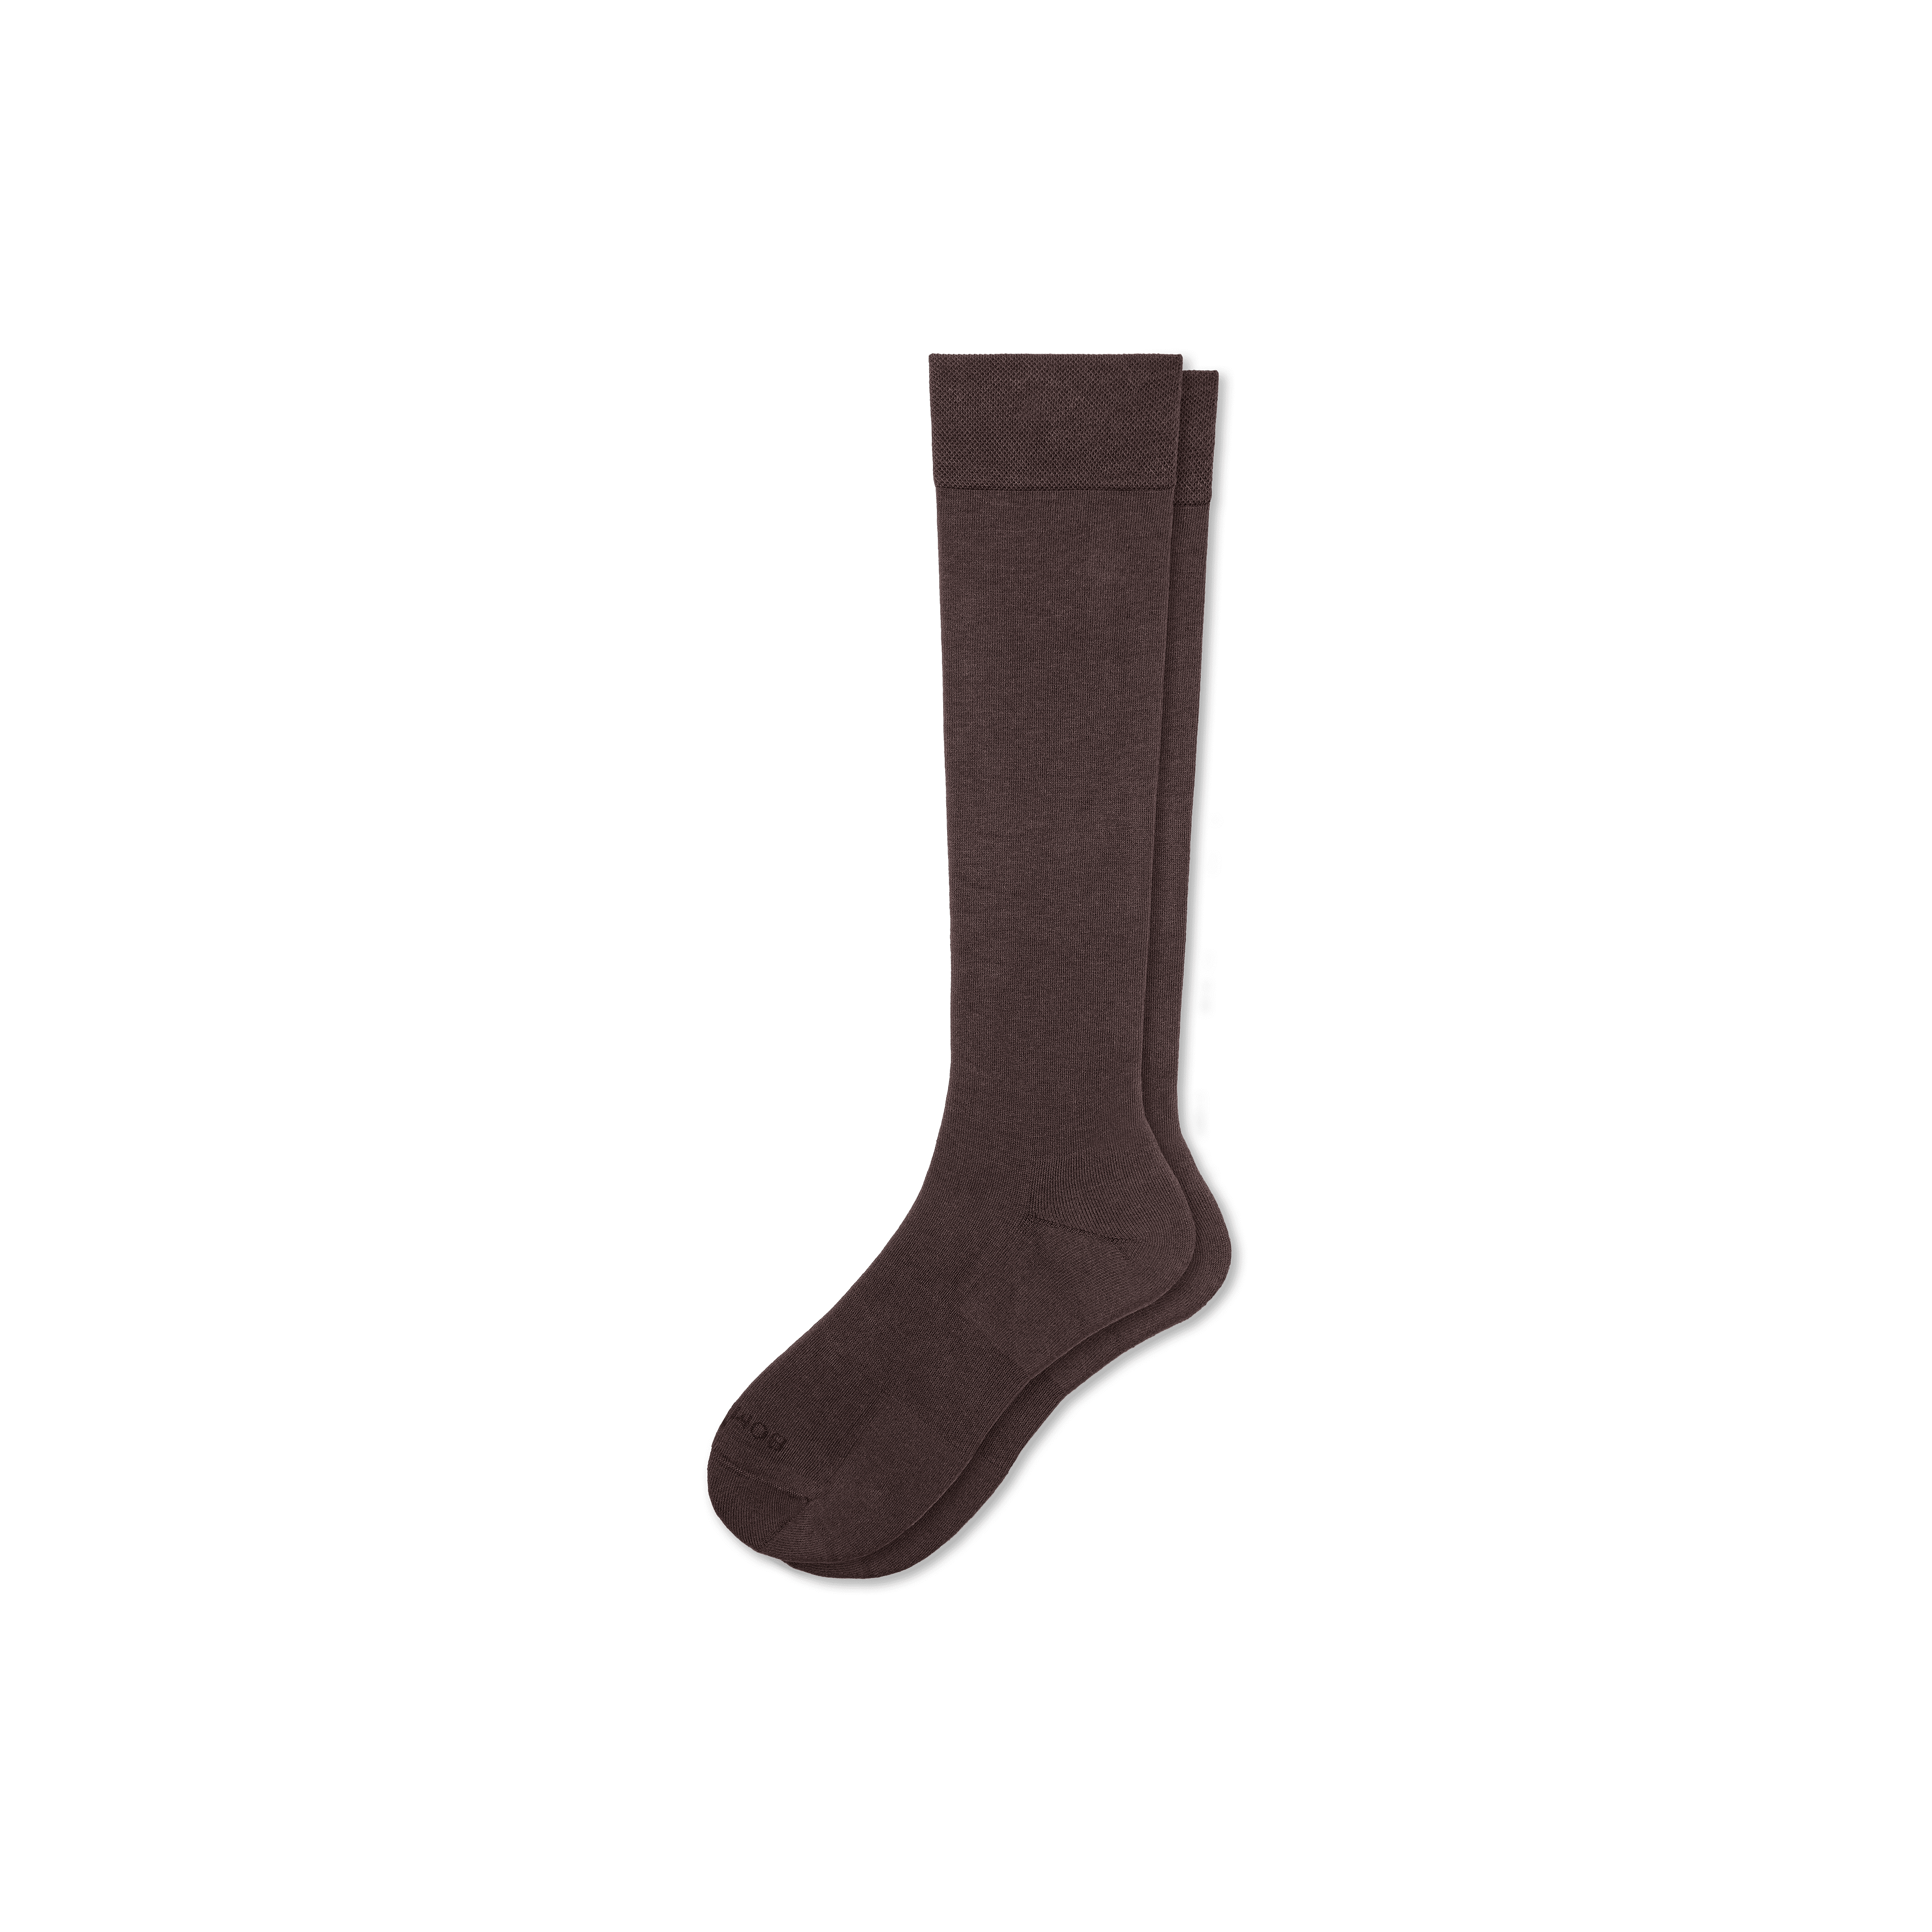 Bombas Dress Knee High Socks In Solid Brown